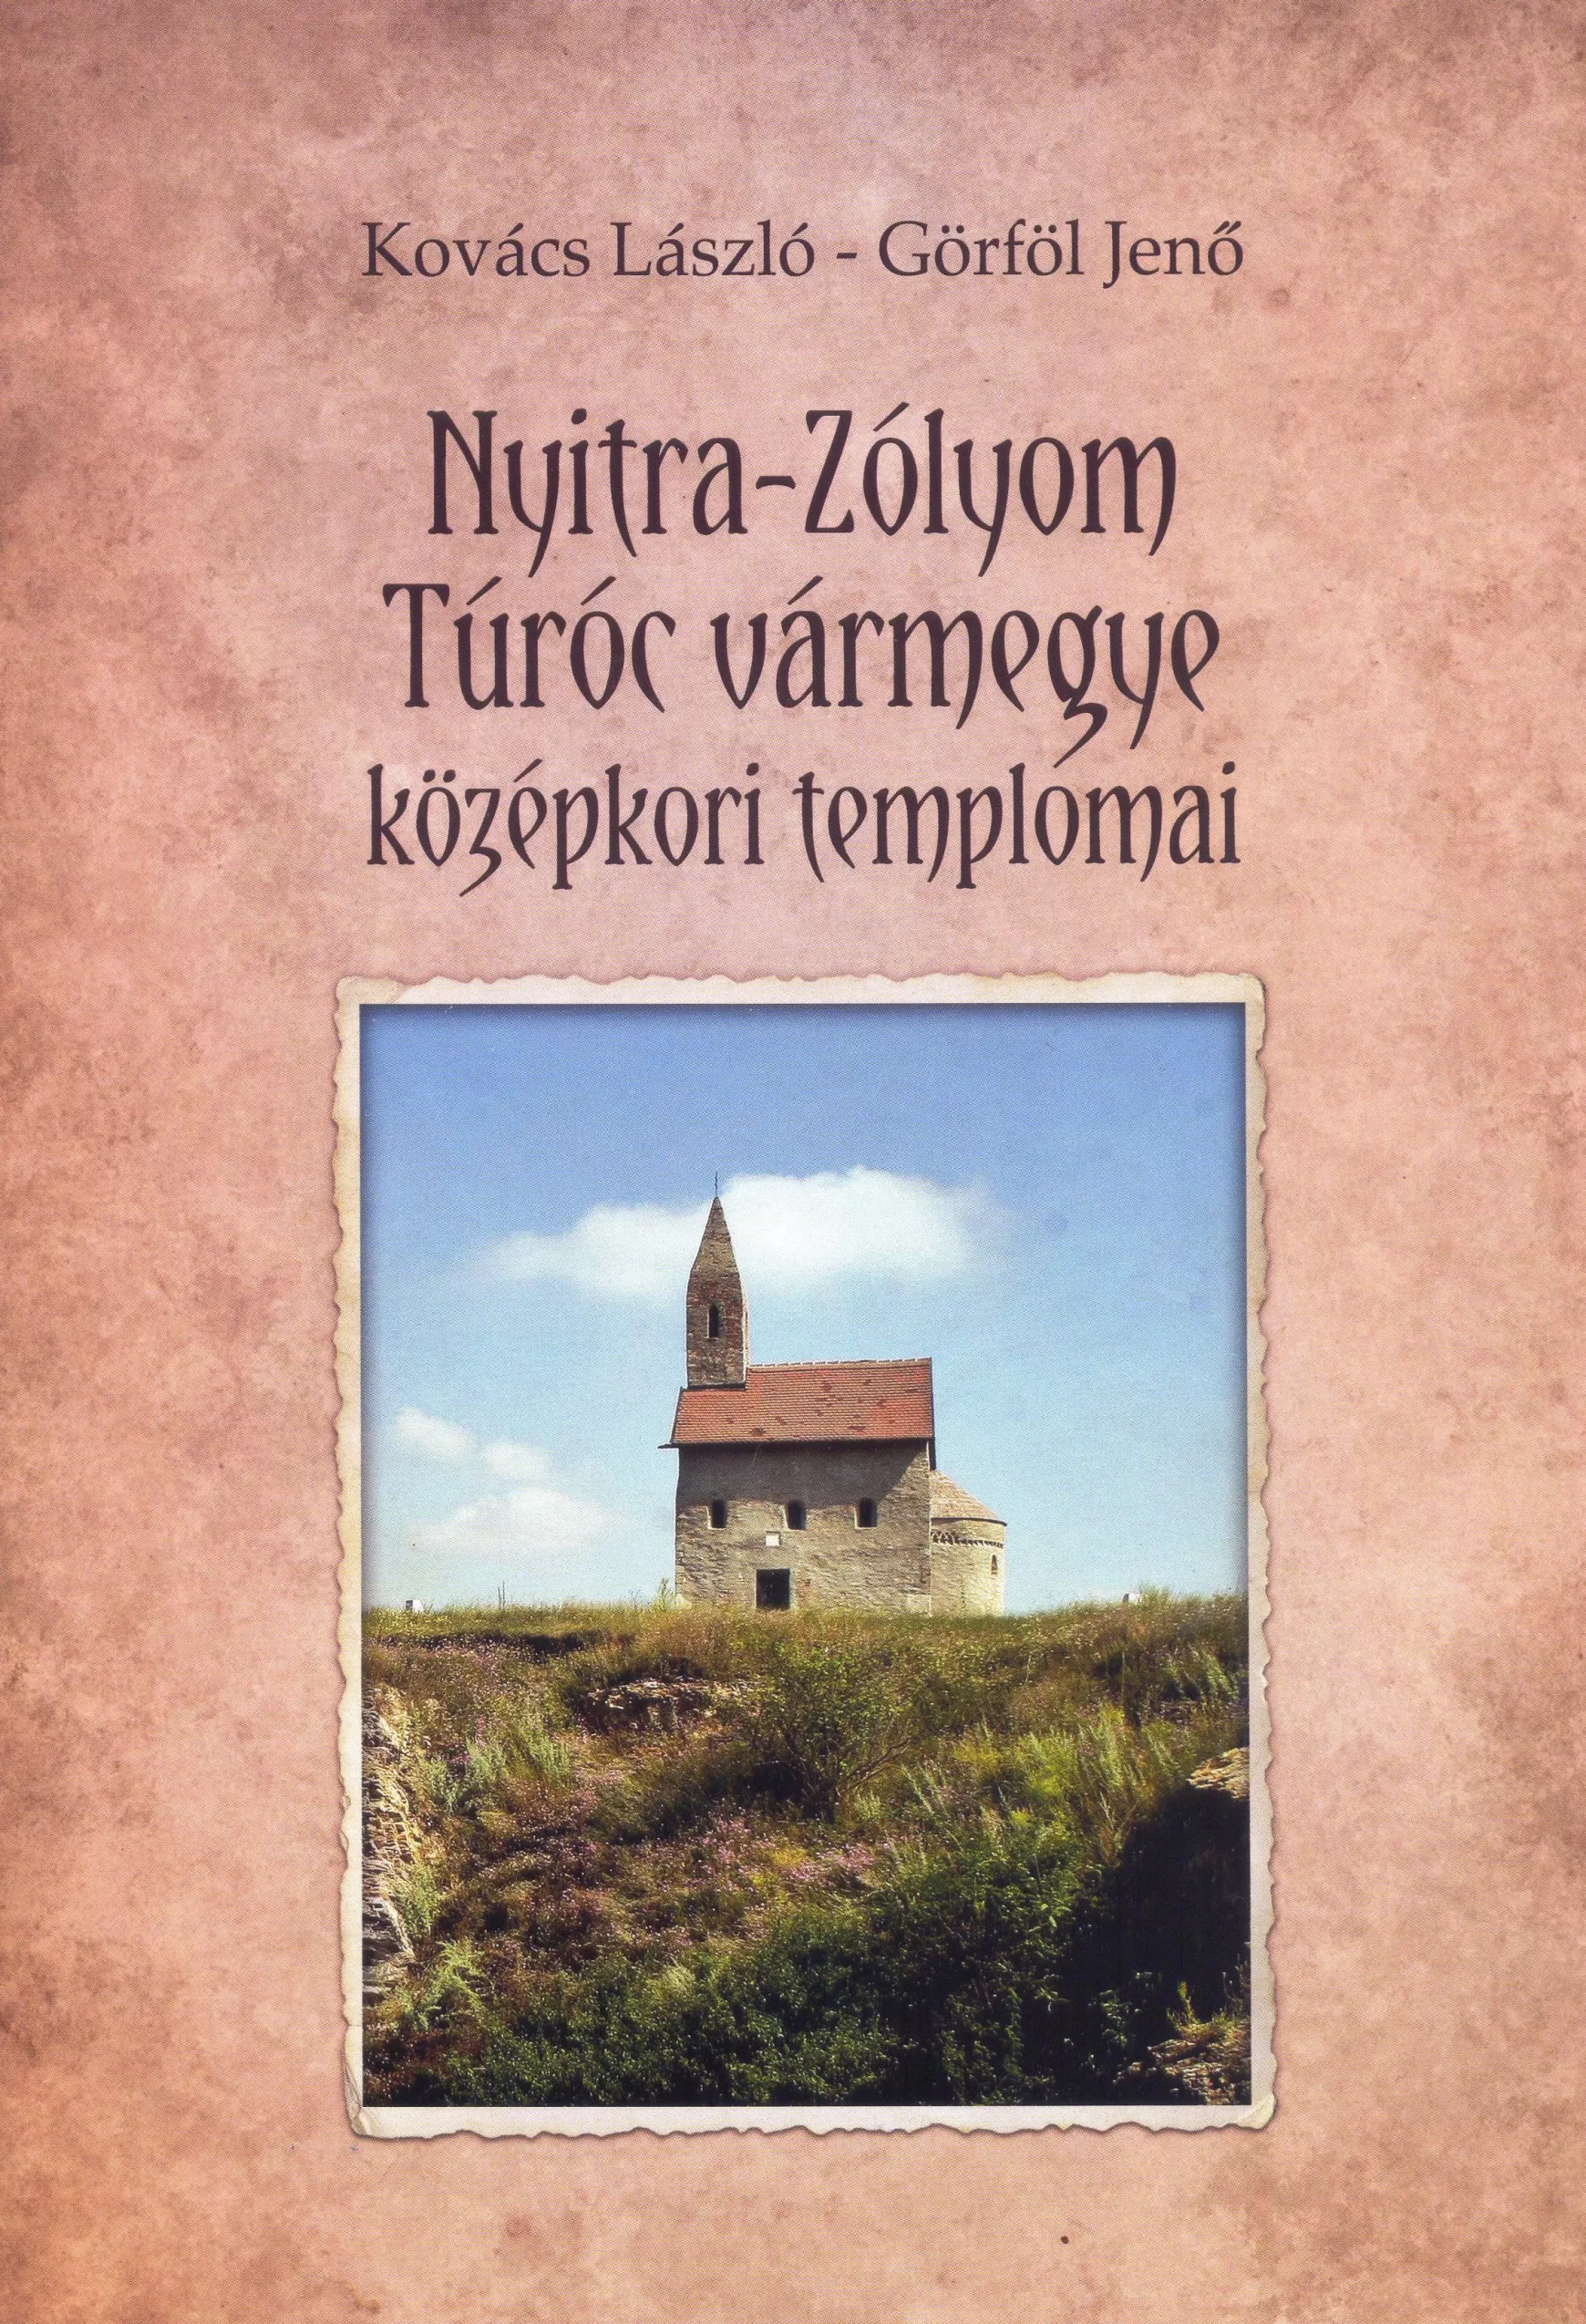 nyitra-zolyom-turoc-varmegye-kozepkori-templomai